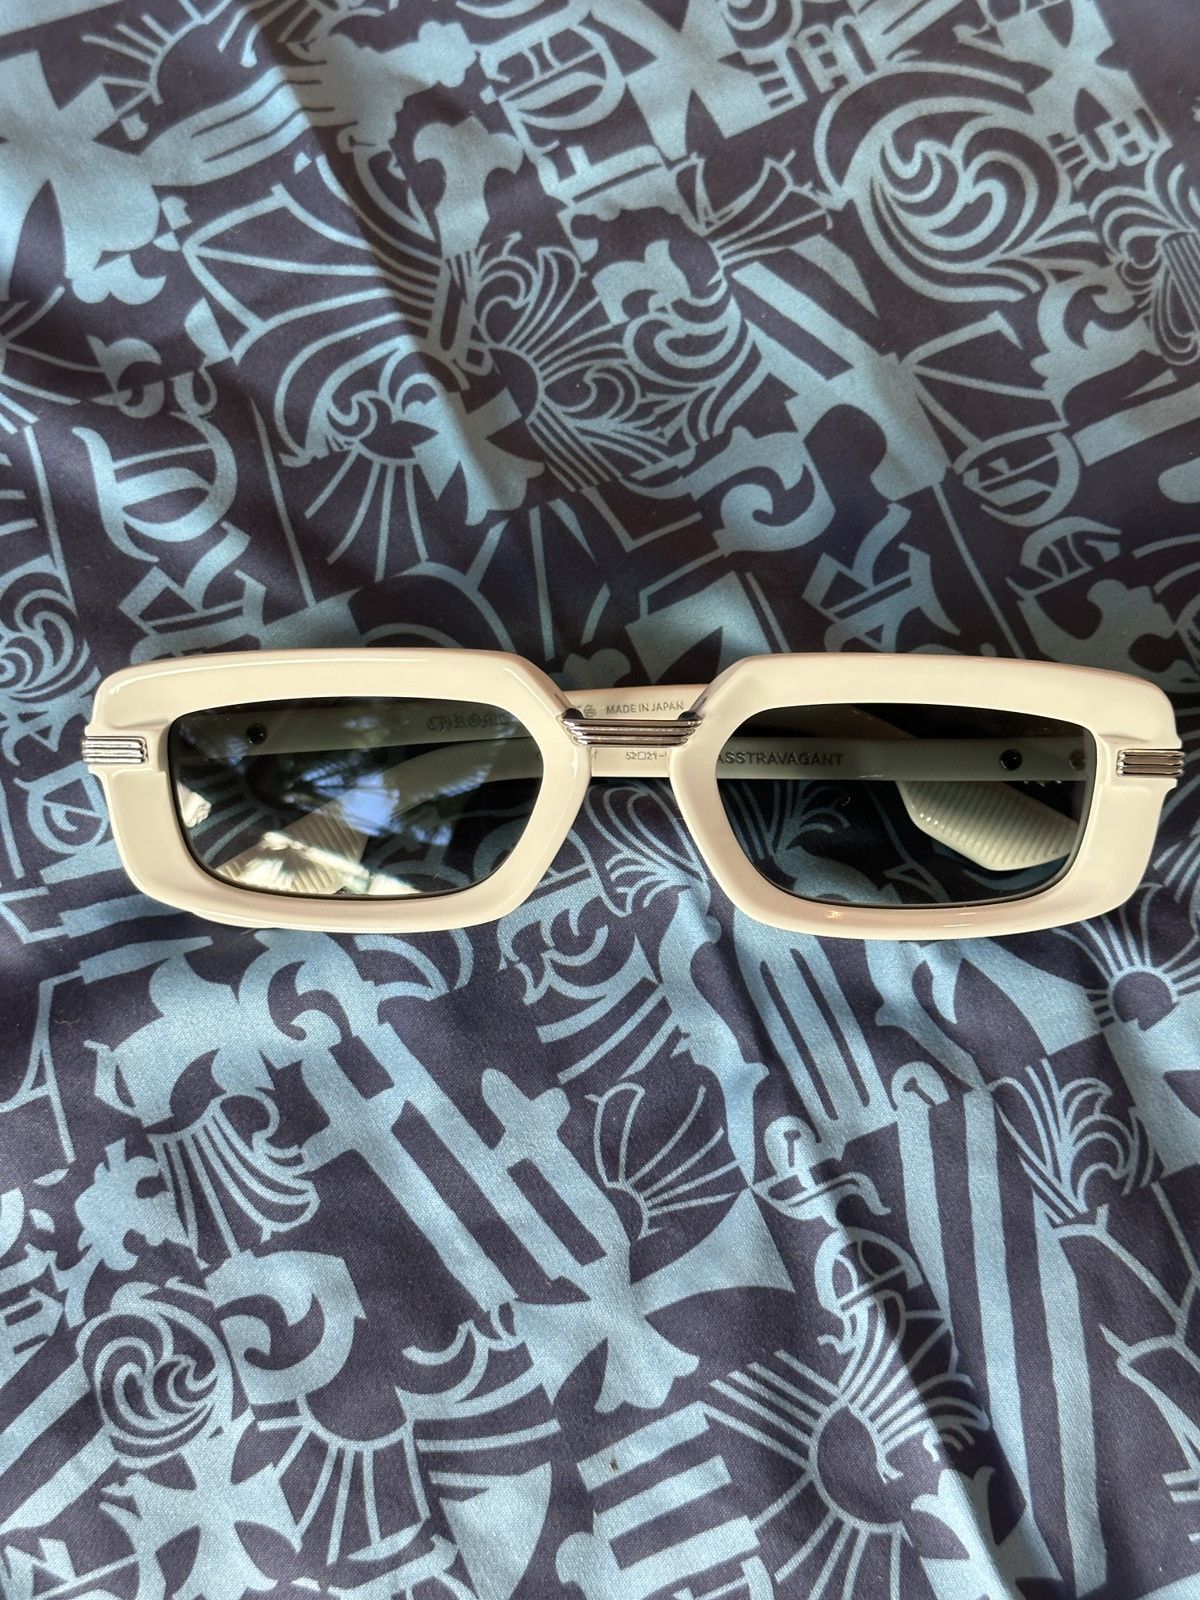 Chrome Hearts Asstravagant Sunglasses | Grailed